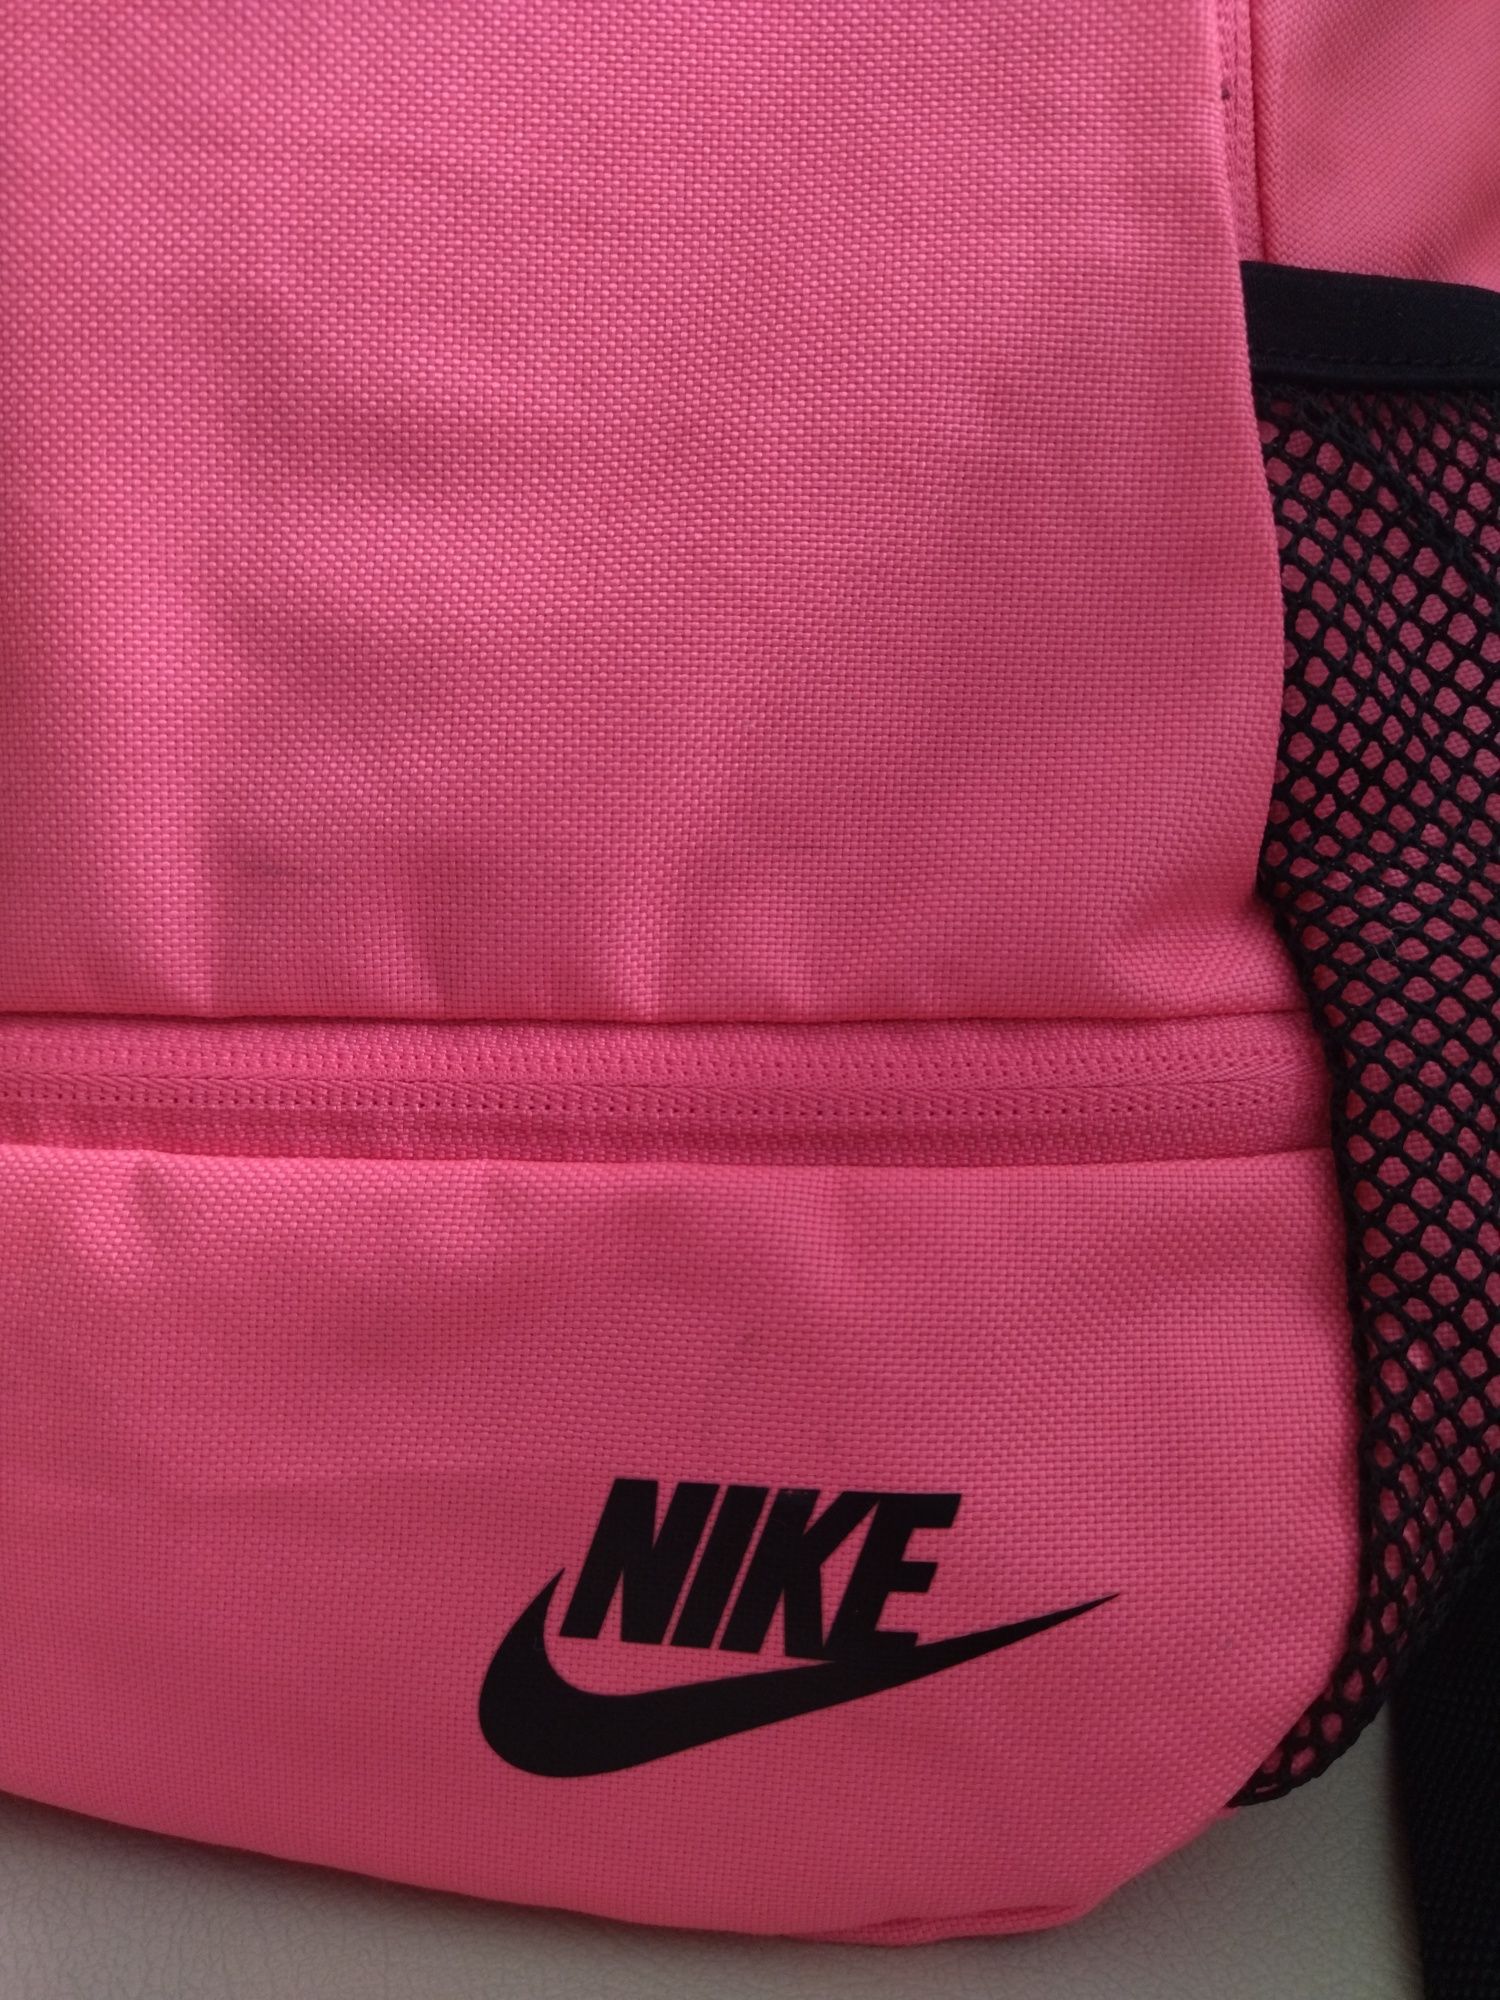 Plecak Nike neonowy róż